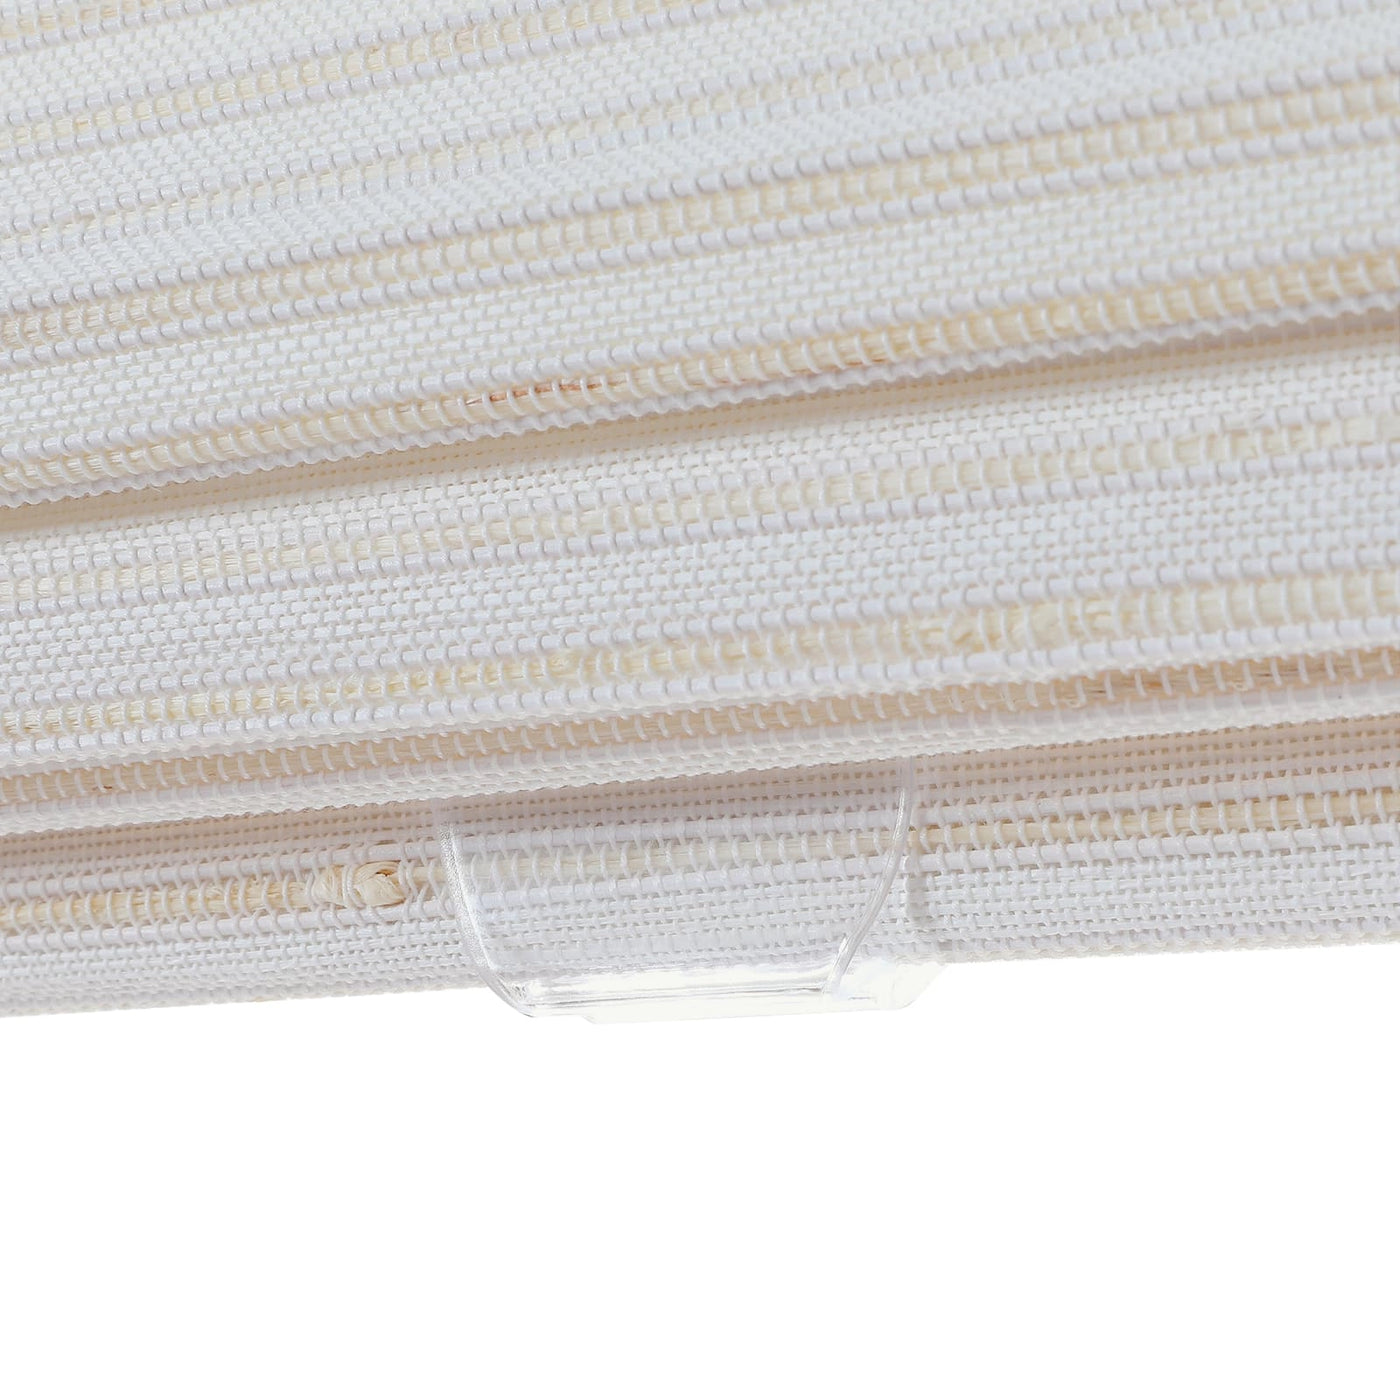 Natural Paper Bamboo Woven Shade - White